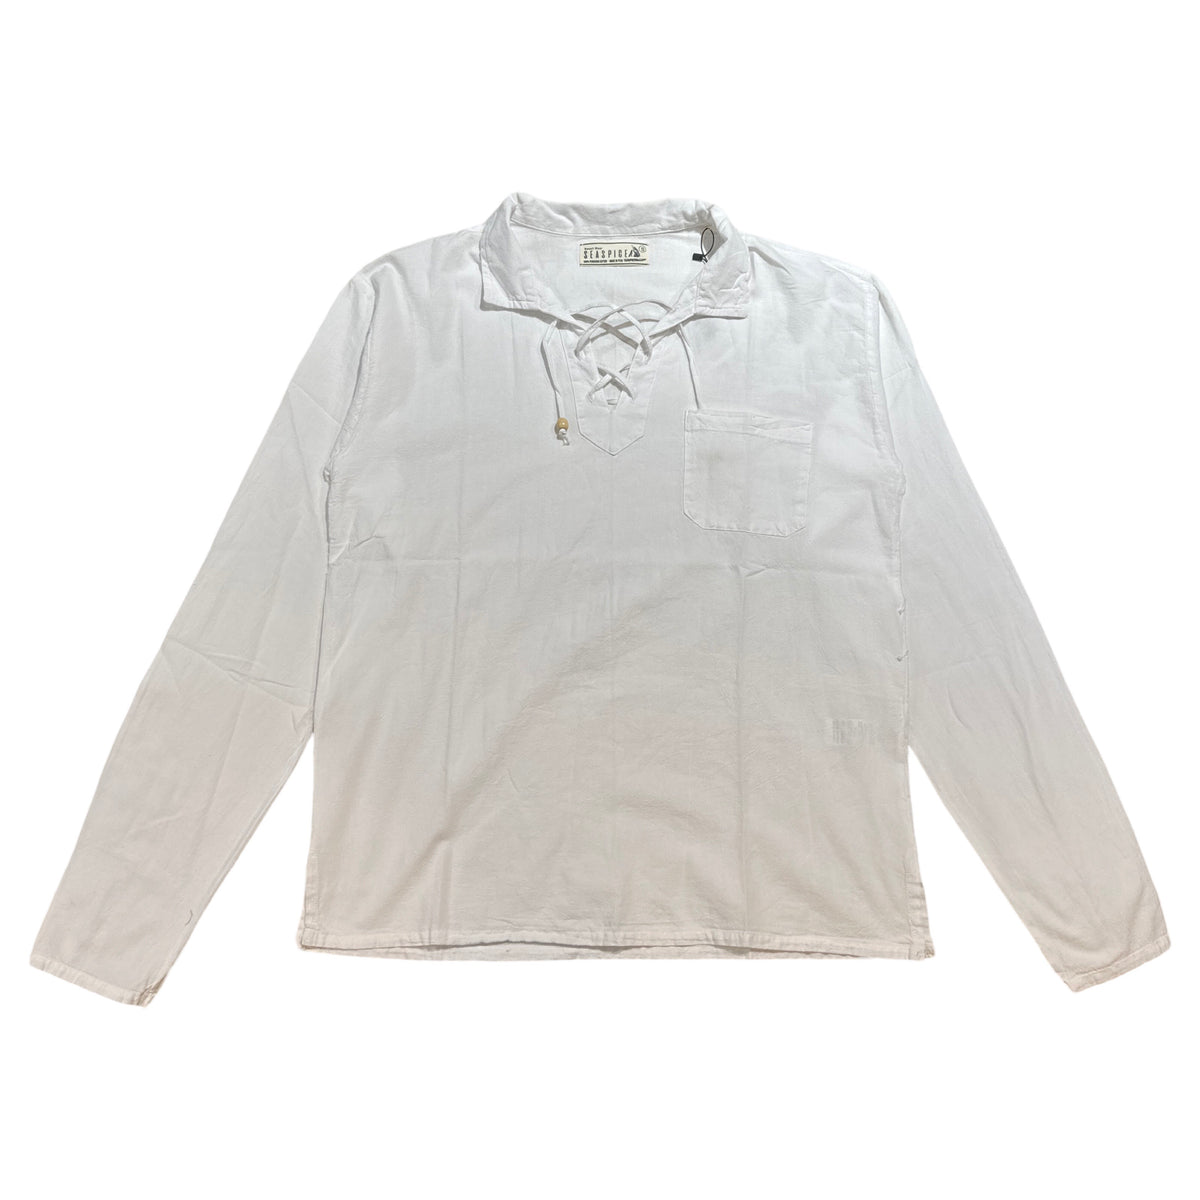 Seaspice White Boho Peruvian Cotton Long Sleeve Shirt - Dudes Boutique